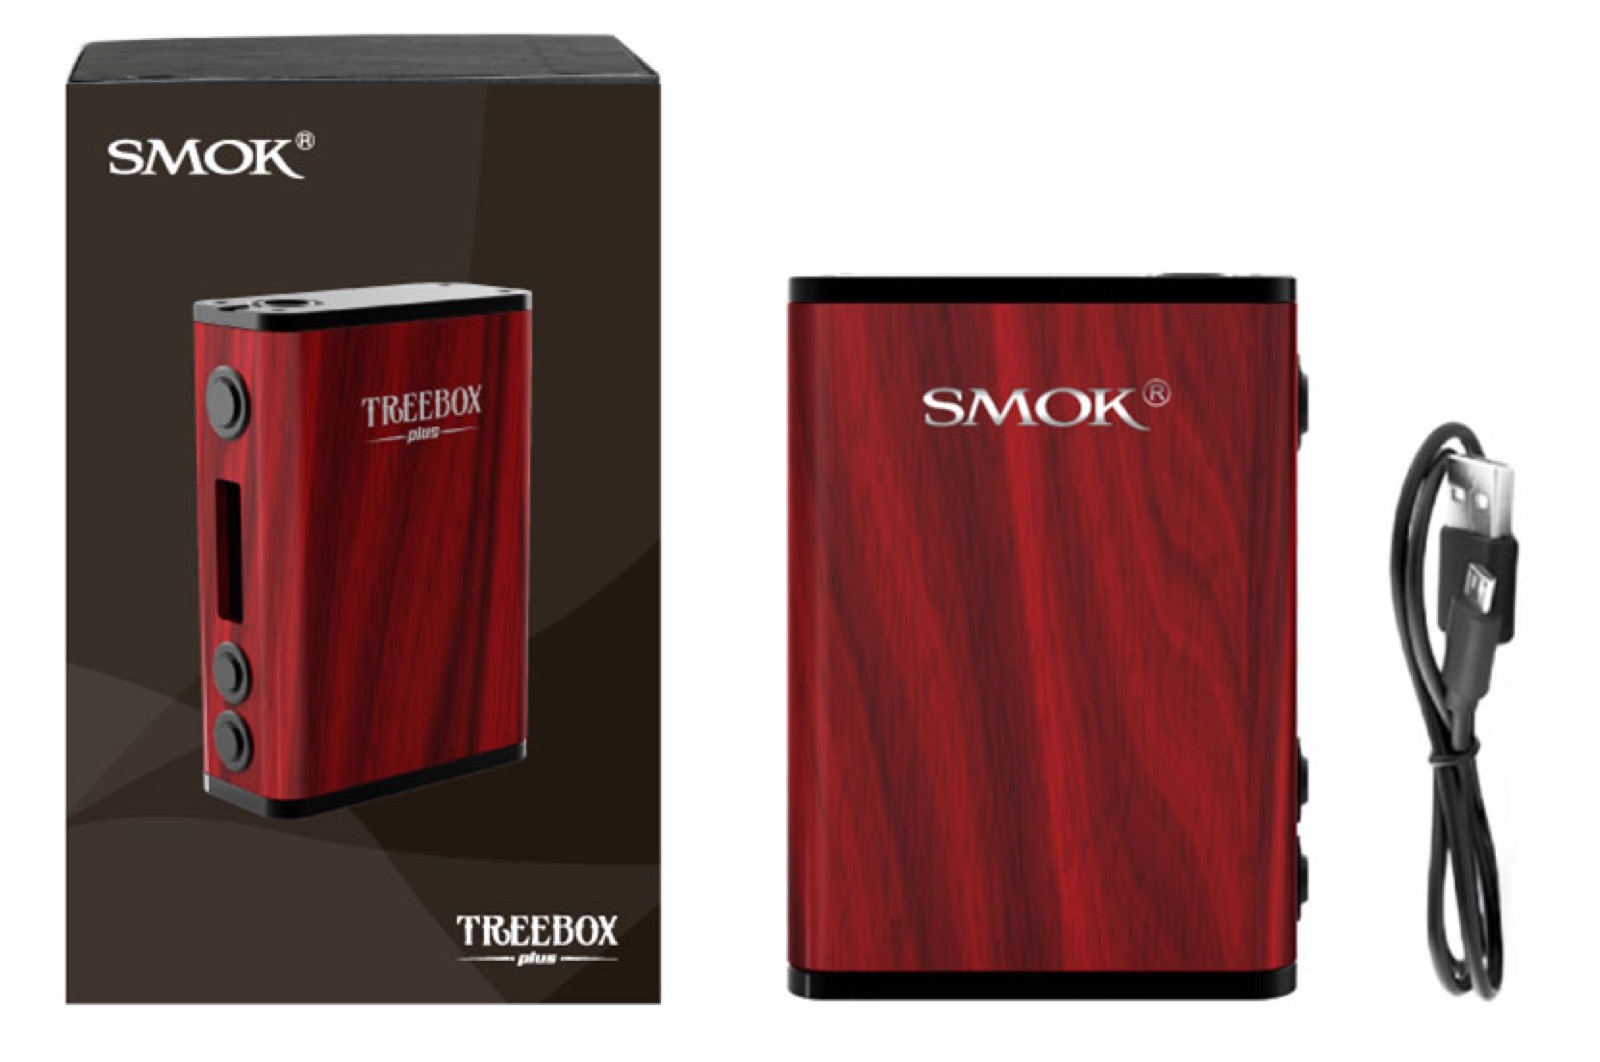 smok-treebox-plus-box-mod.png